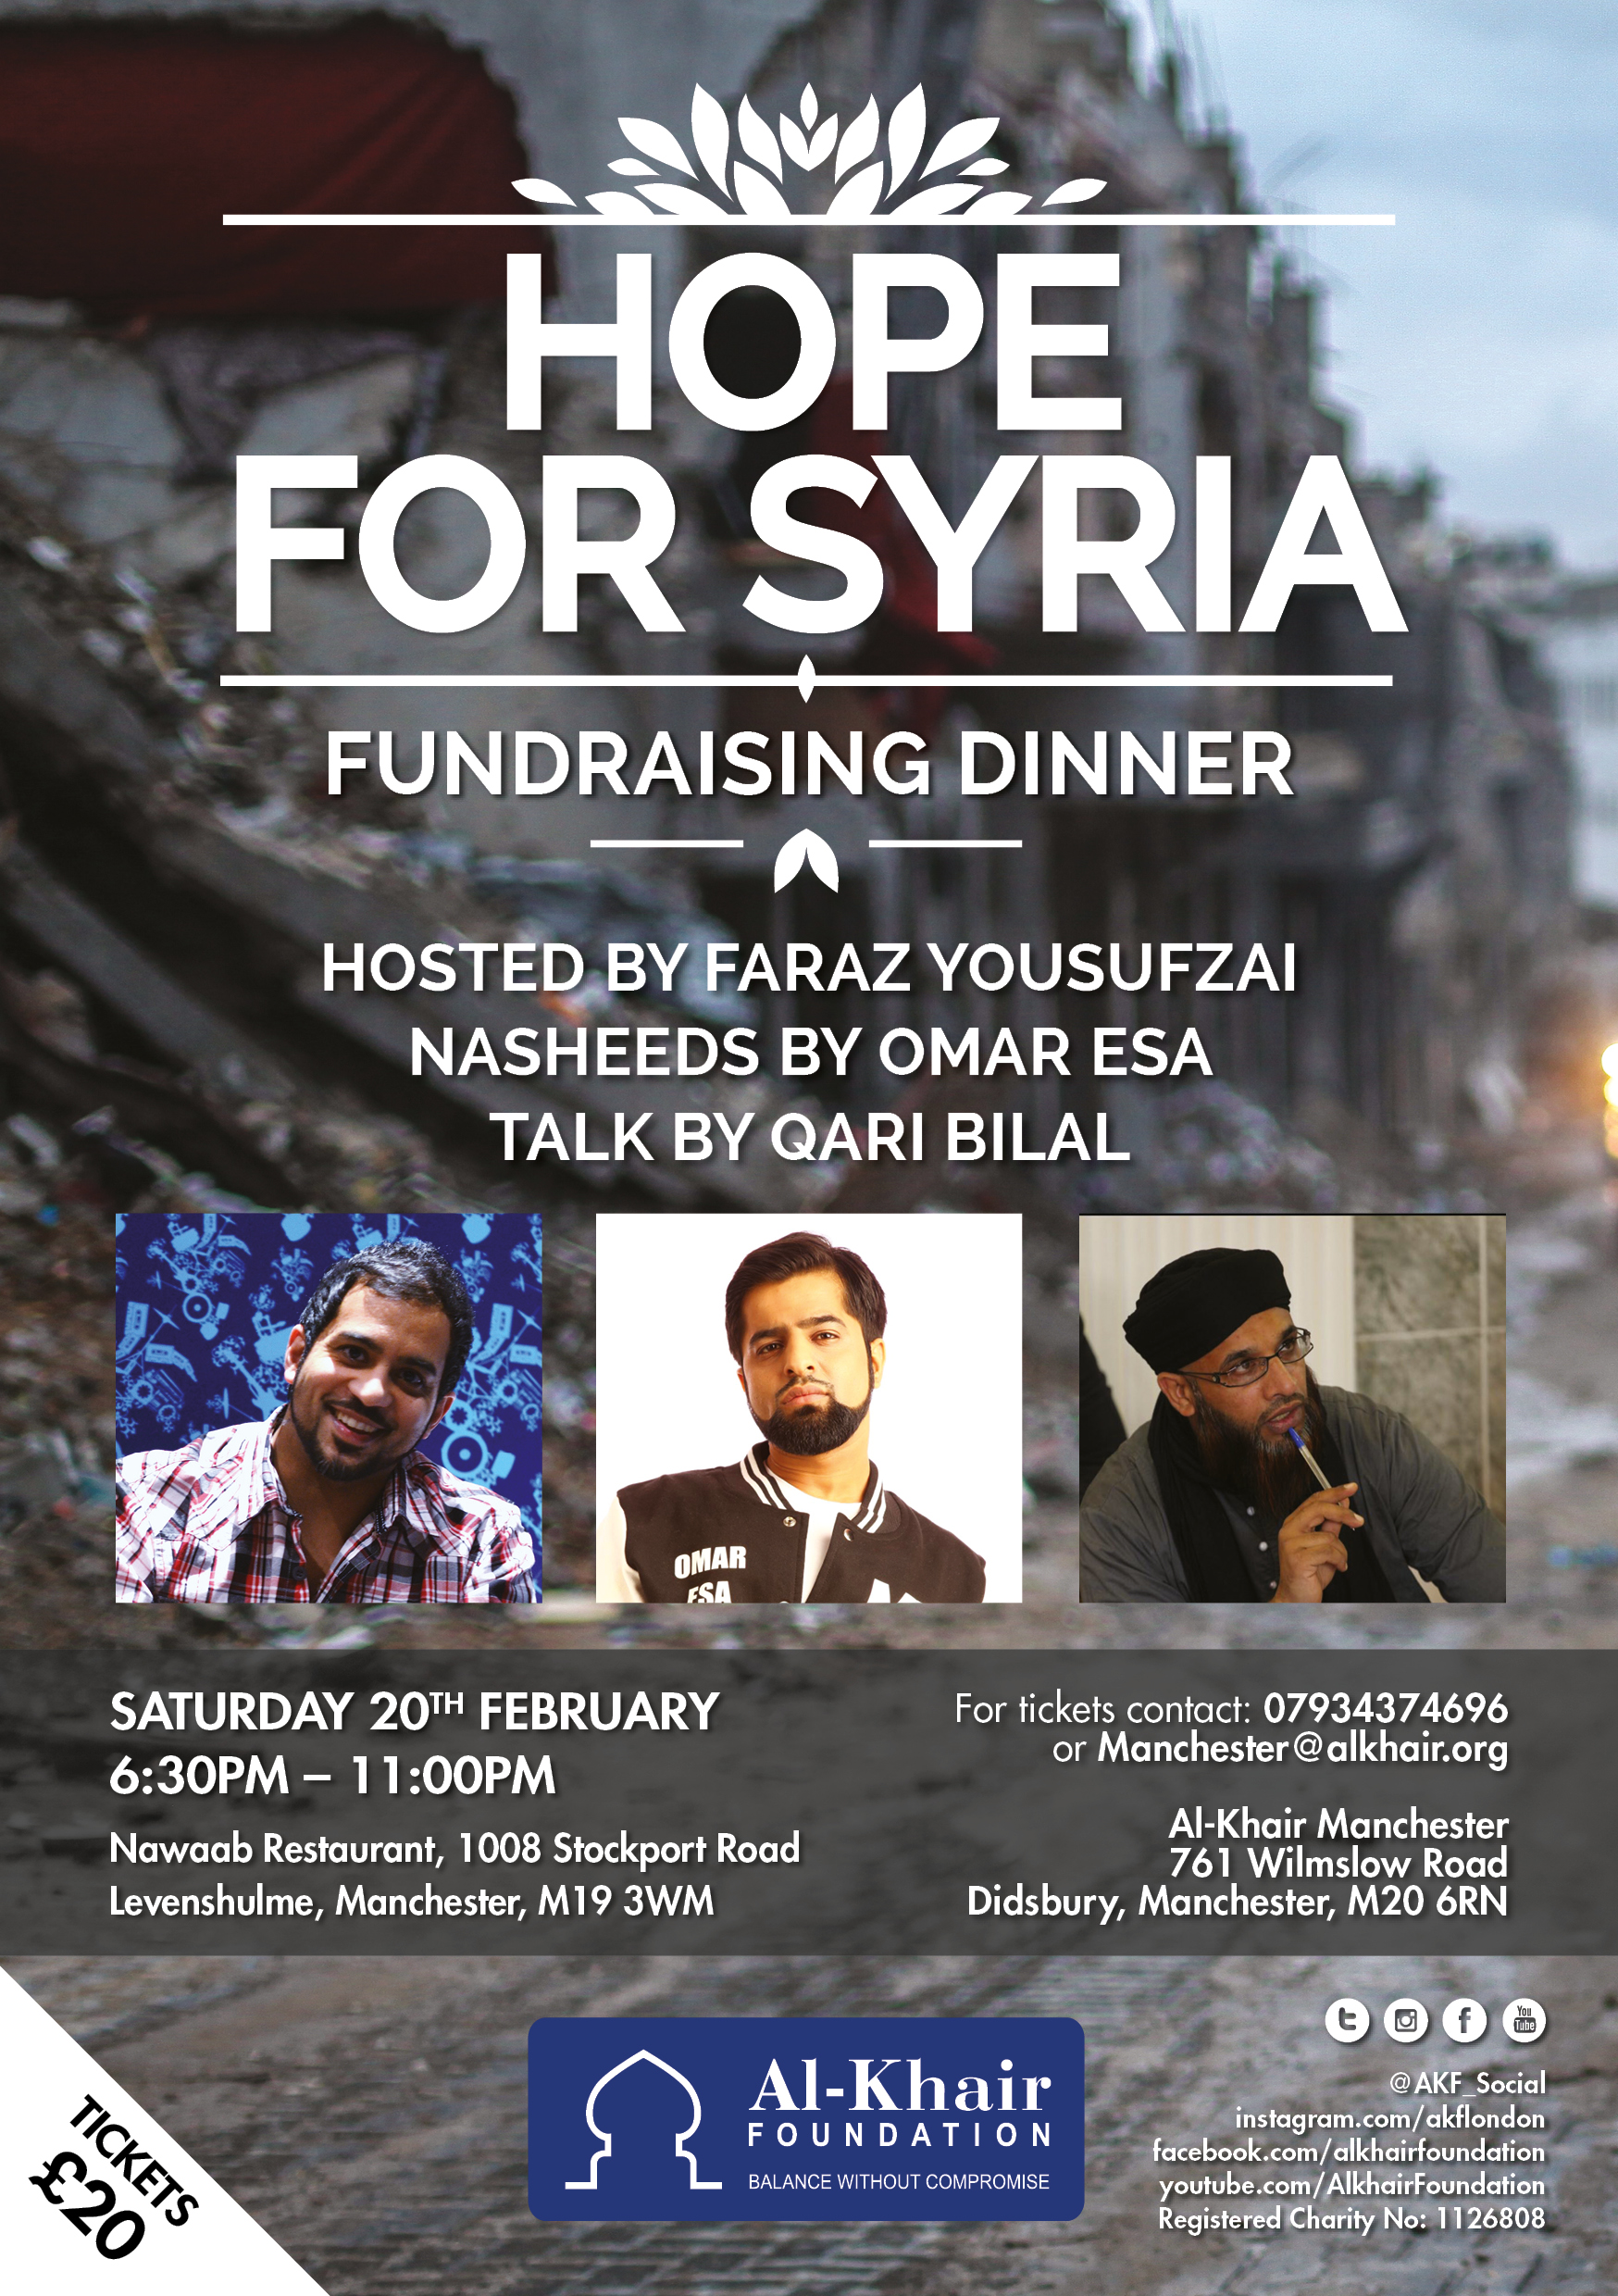 Syria, fundraising dinner,hope for Syria